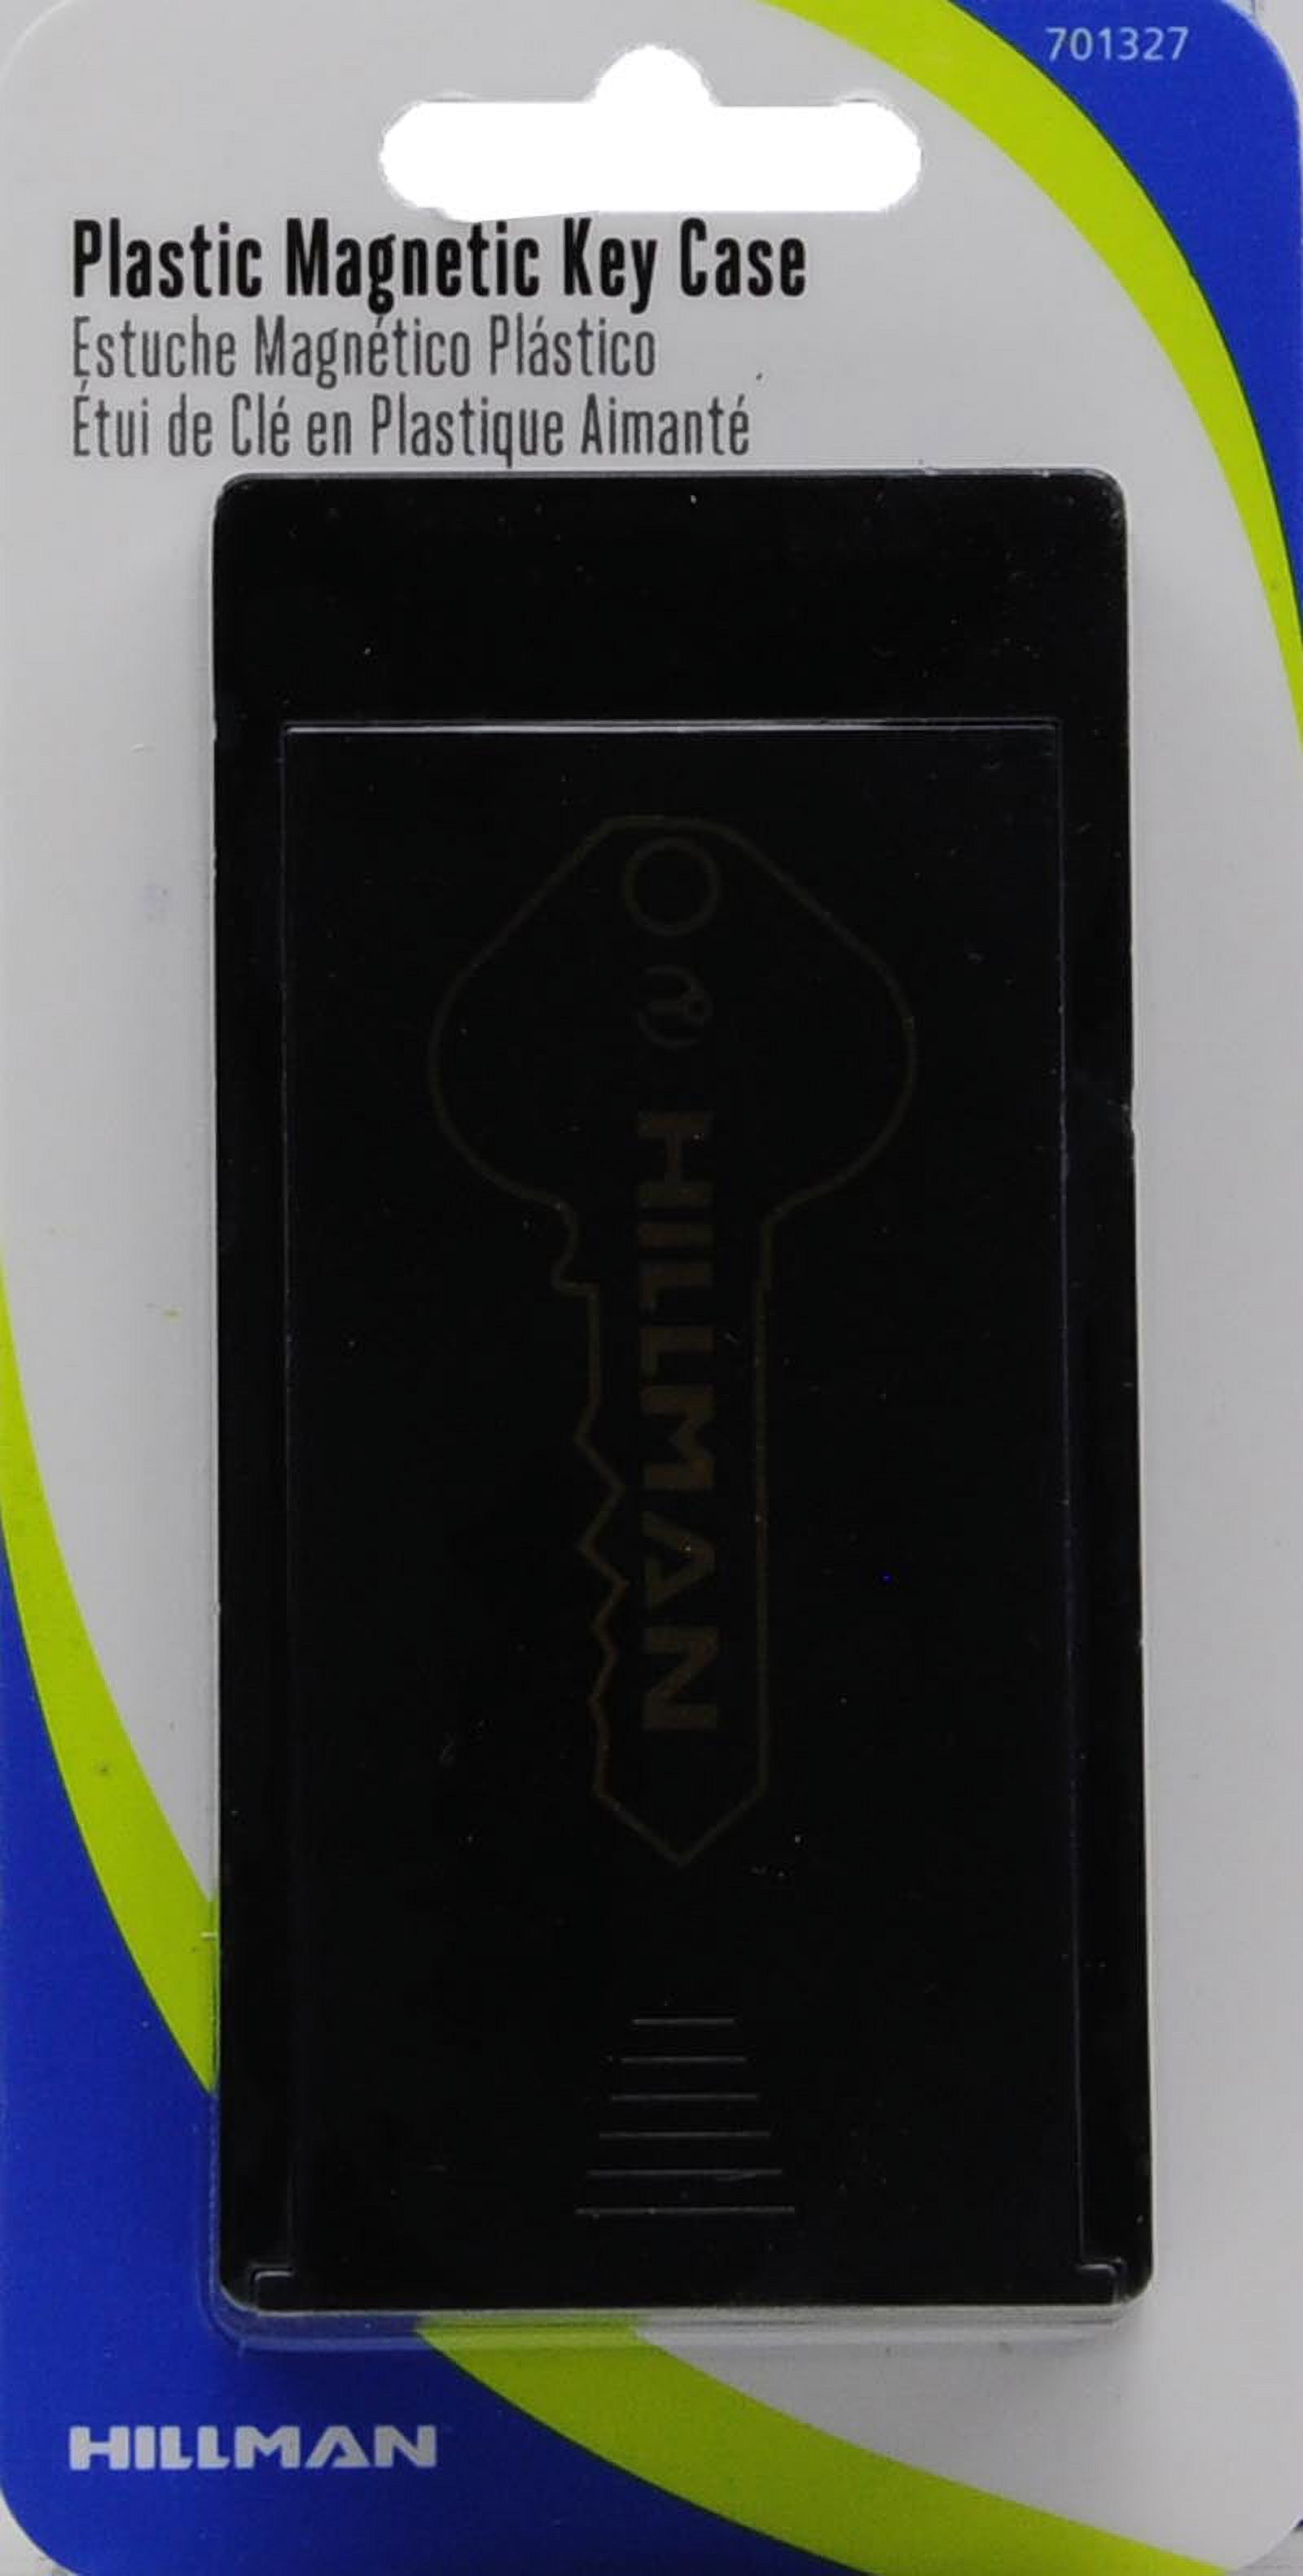 Hillman Plastic Magnetic Key Case Black - image 2 of 2